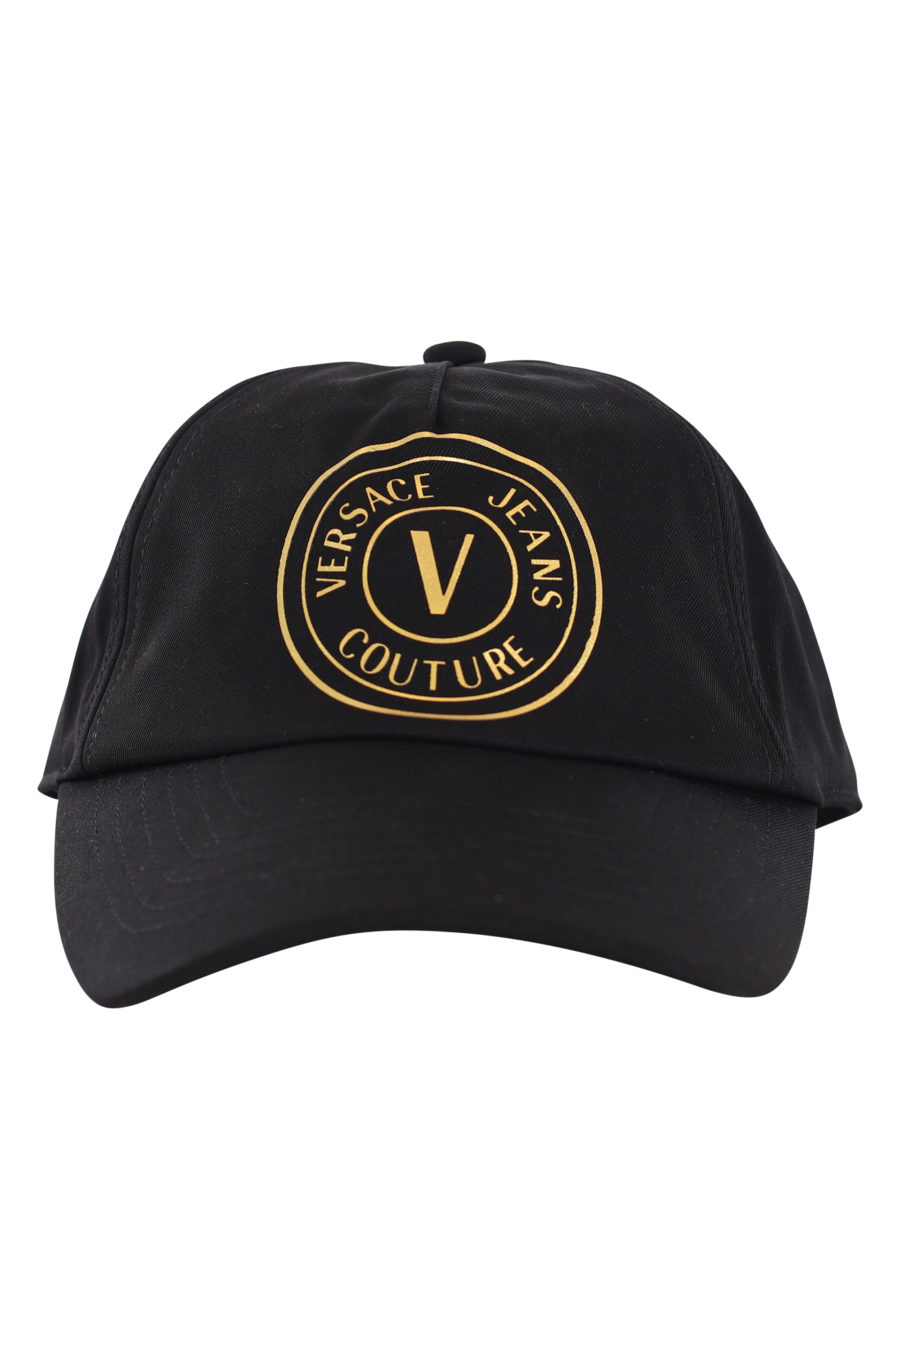 Black cap with round gold logo - IMG 0138